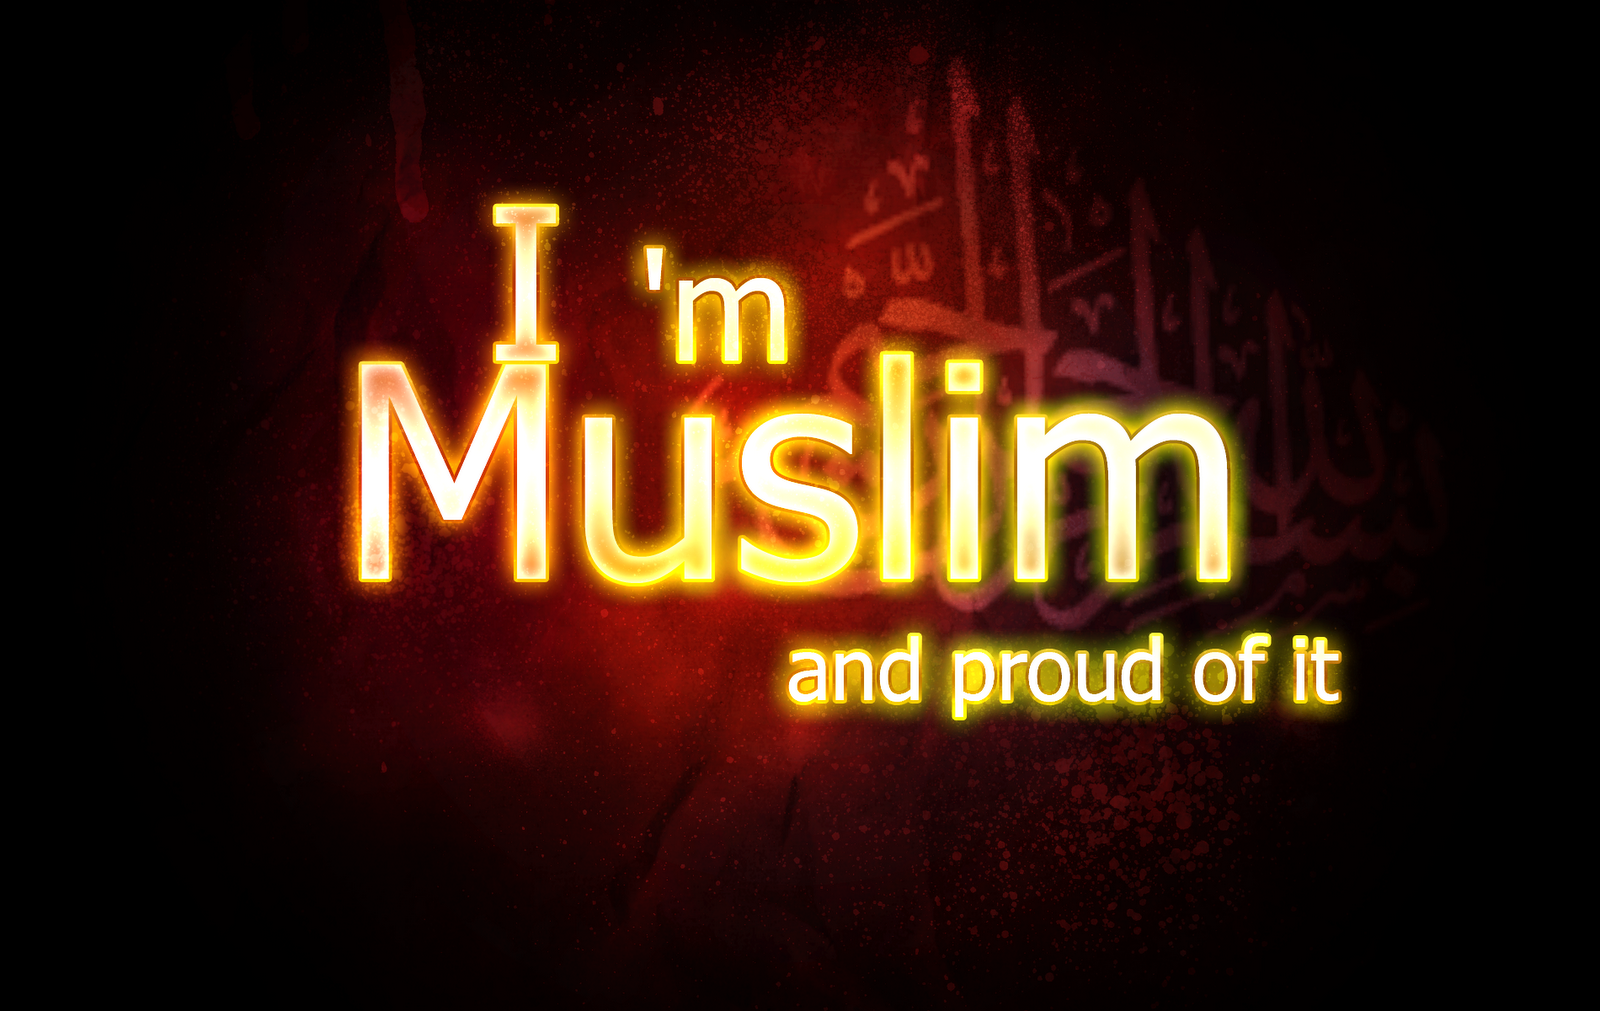 https://blogger.googleusercontent.com/img/b/R29vZ2xl/AVvXsEgFgGa2phQM8G__GKUnFACWVnjZY94_LB-z42YE-rfYoQfcrlu4g1ZNuWb0kfUW0RGSYugkDkYqzmoVpUcA6ULUfJ8GSq0gUGFCfmdsFCFdUFfqft5WDSADGxa60E61CBAWfxrB36JD3Xe6/s1600/Wallpaper+Indah+Islami+-+Proud+To+Be+Muslim+-+ziedelefernideviantartcom.png